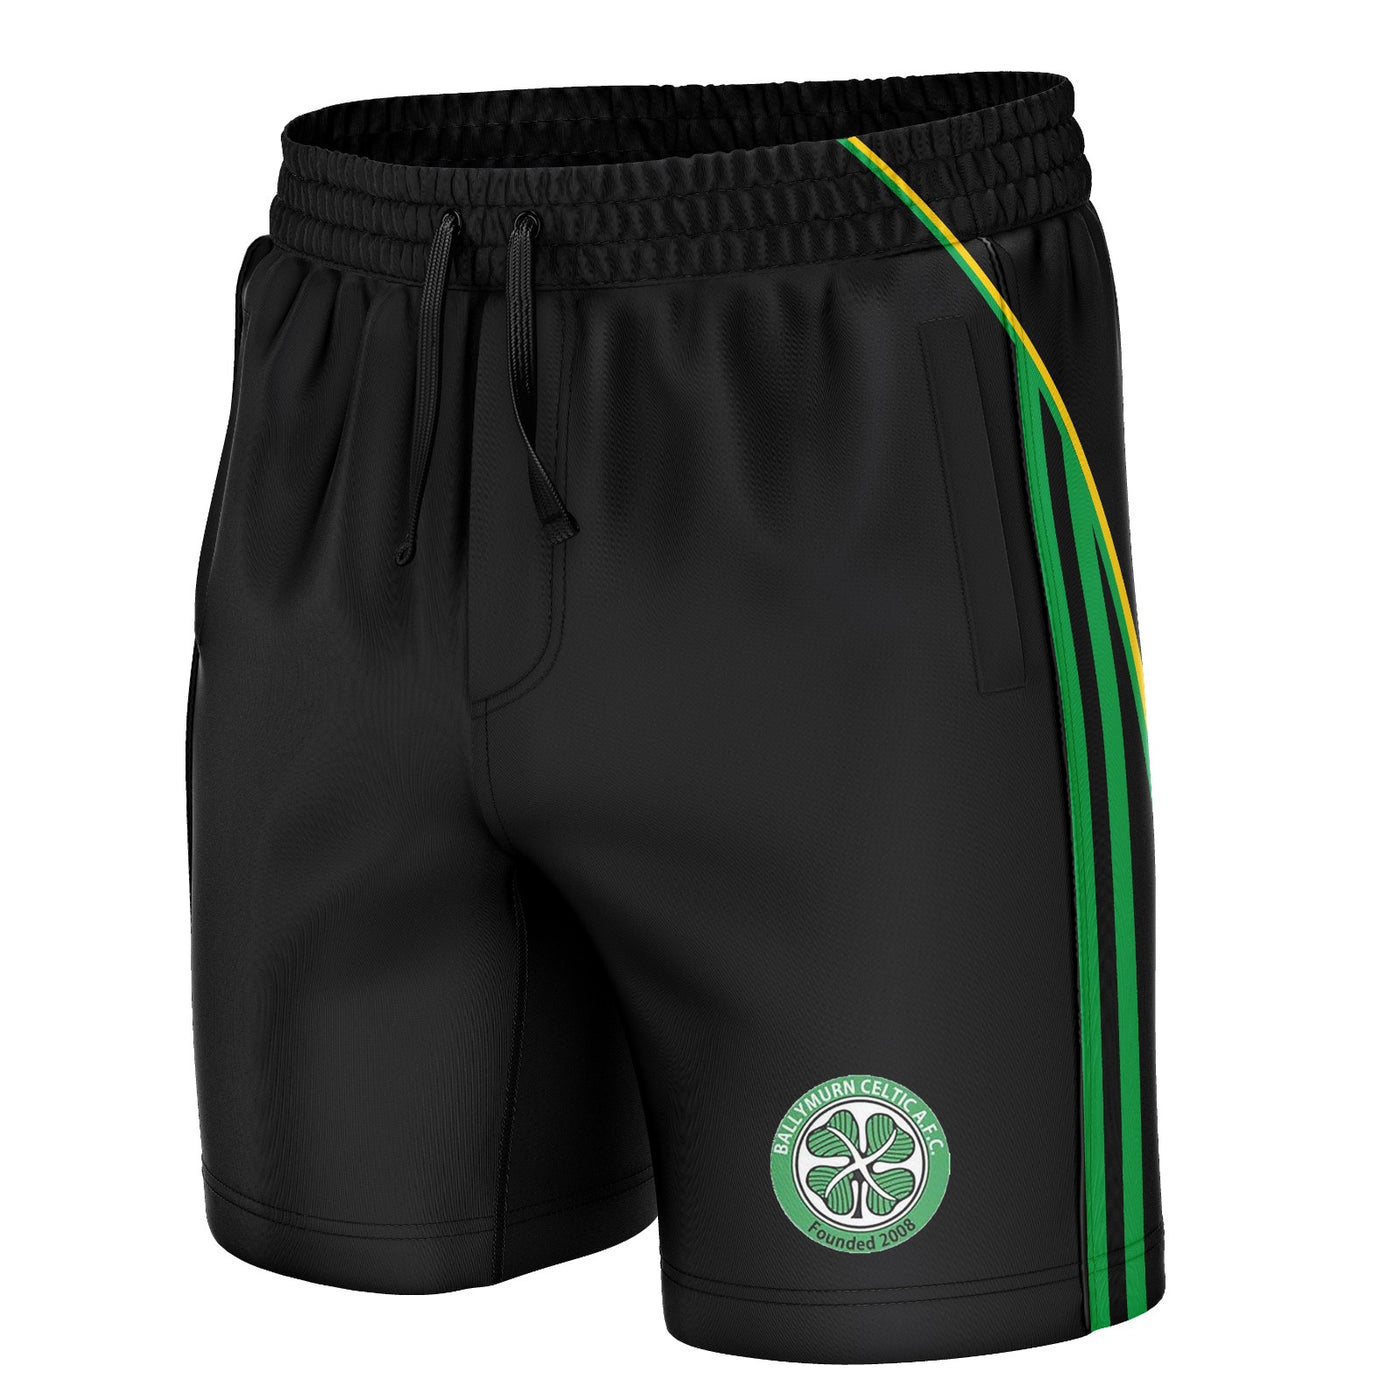 Ballymurn Celtic AFC - Leisure Shorts